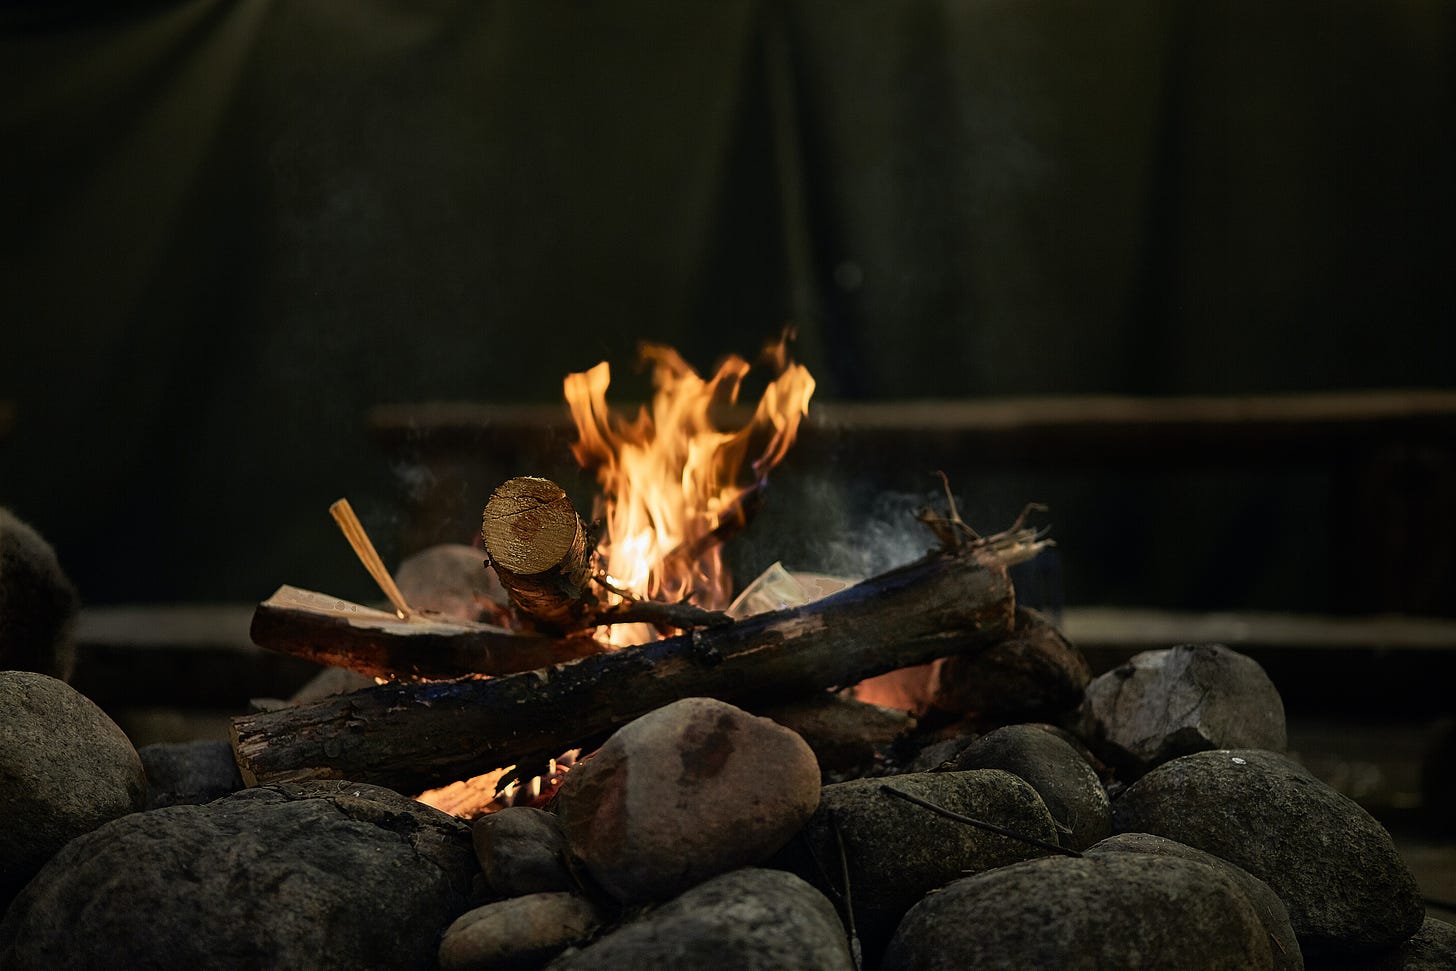 a campfire